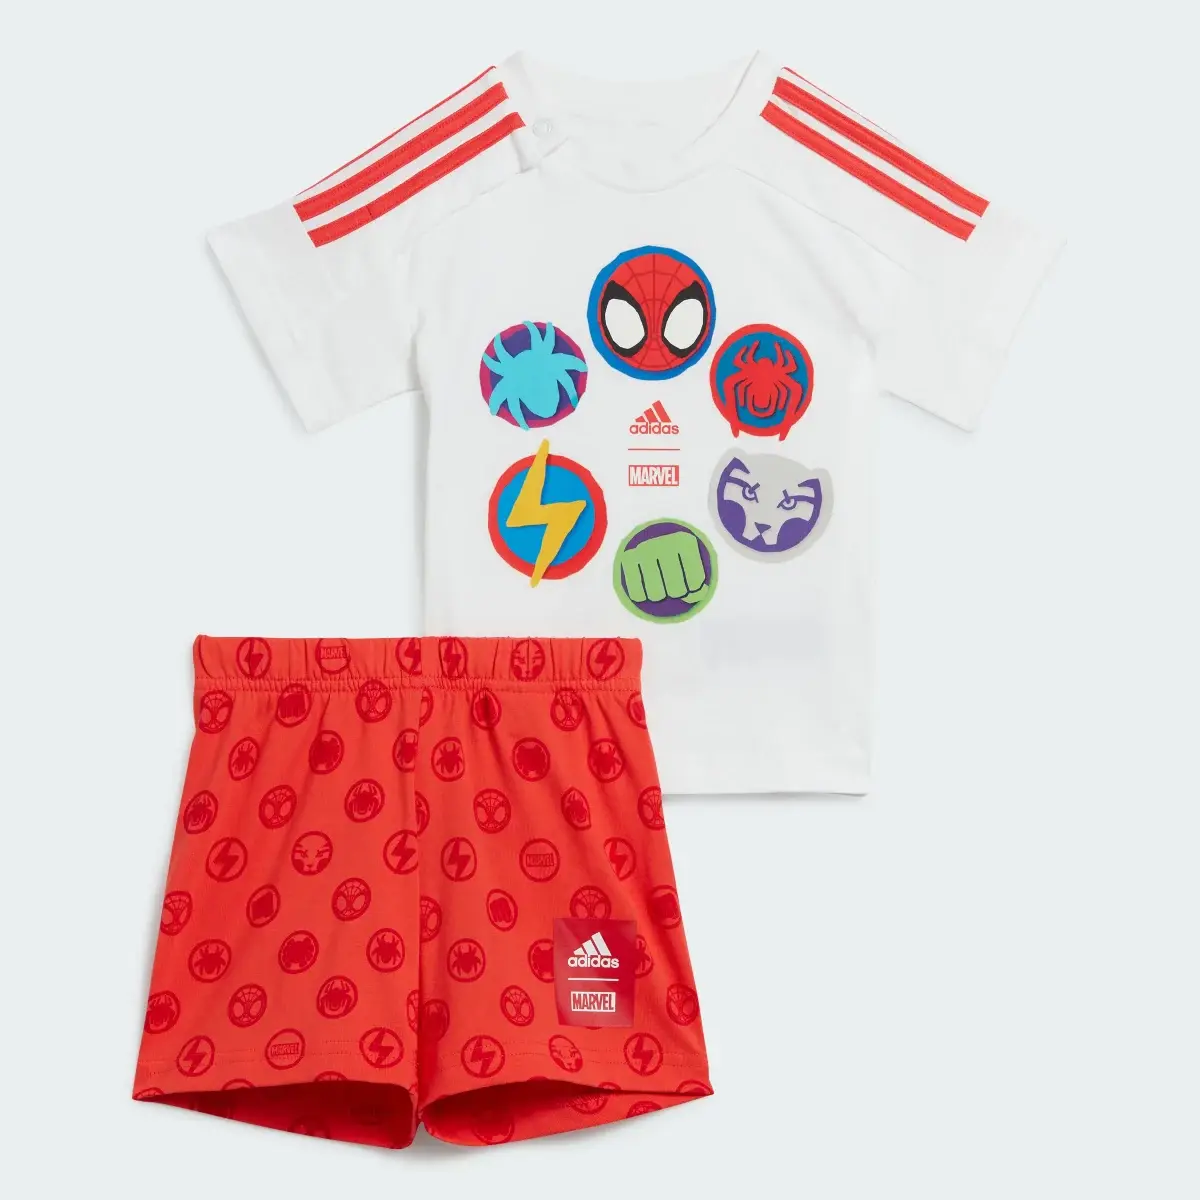 Adidas x Marvel Spider-Man Tee and Shorts Set. 1